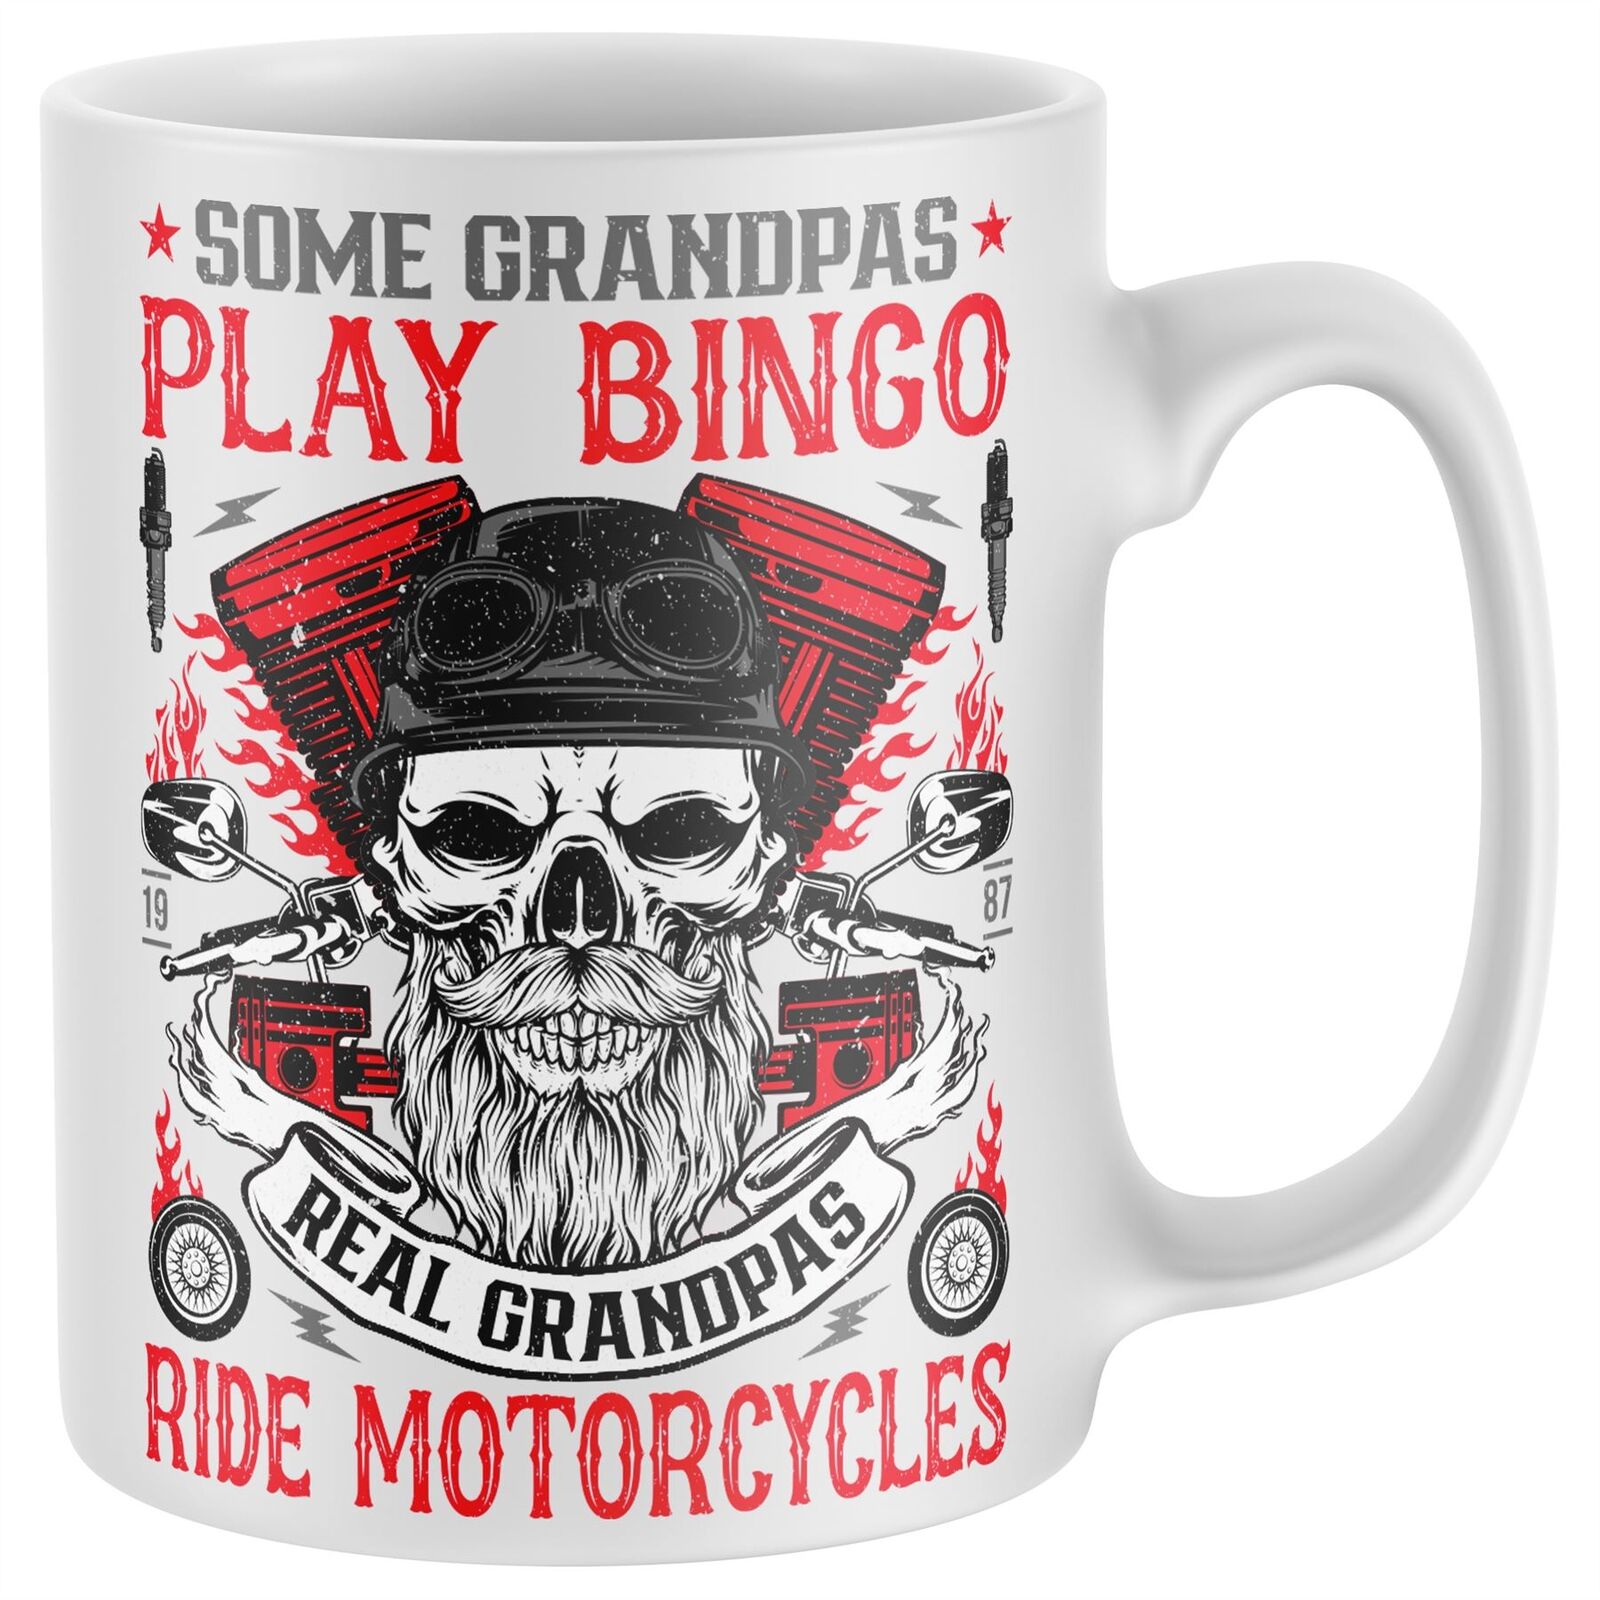 Real Grandpas Ride Motorcycles Gifts Funny Mugs Birthday Mug Motorbike Birthday